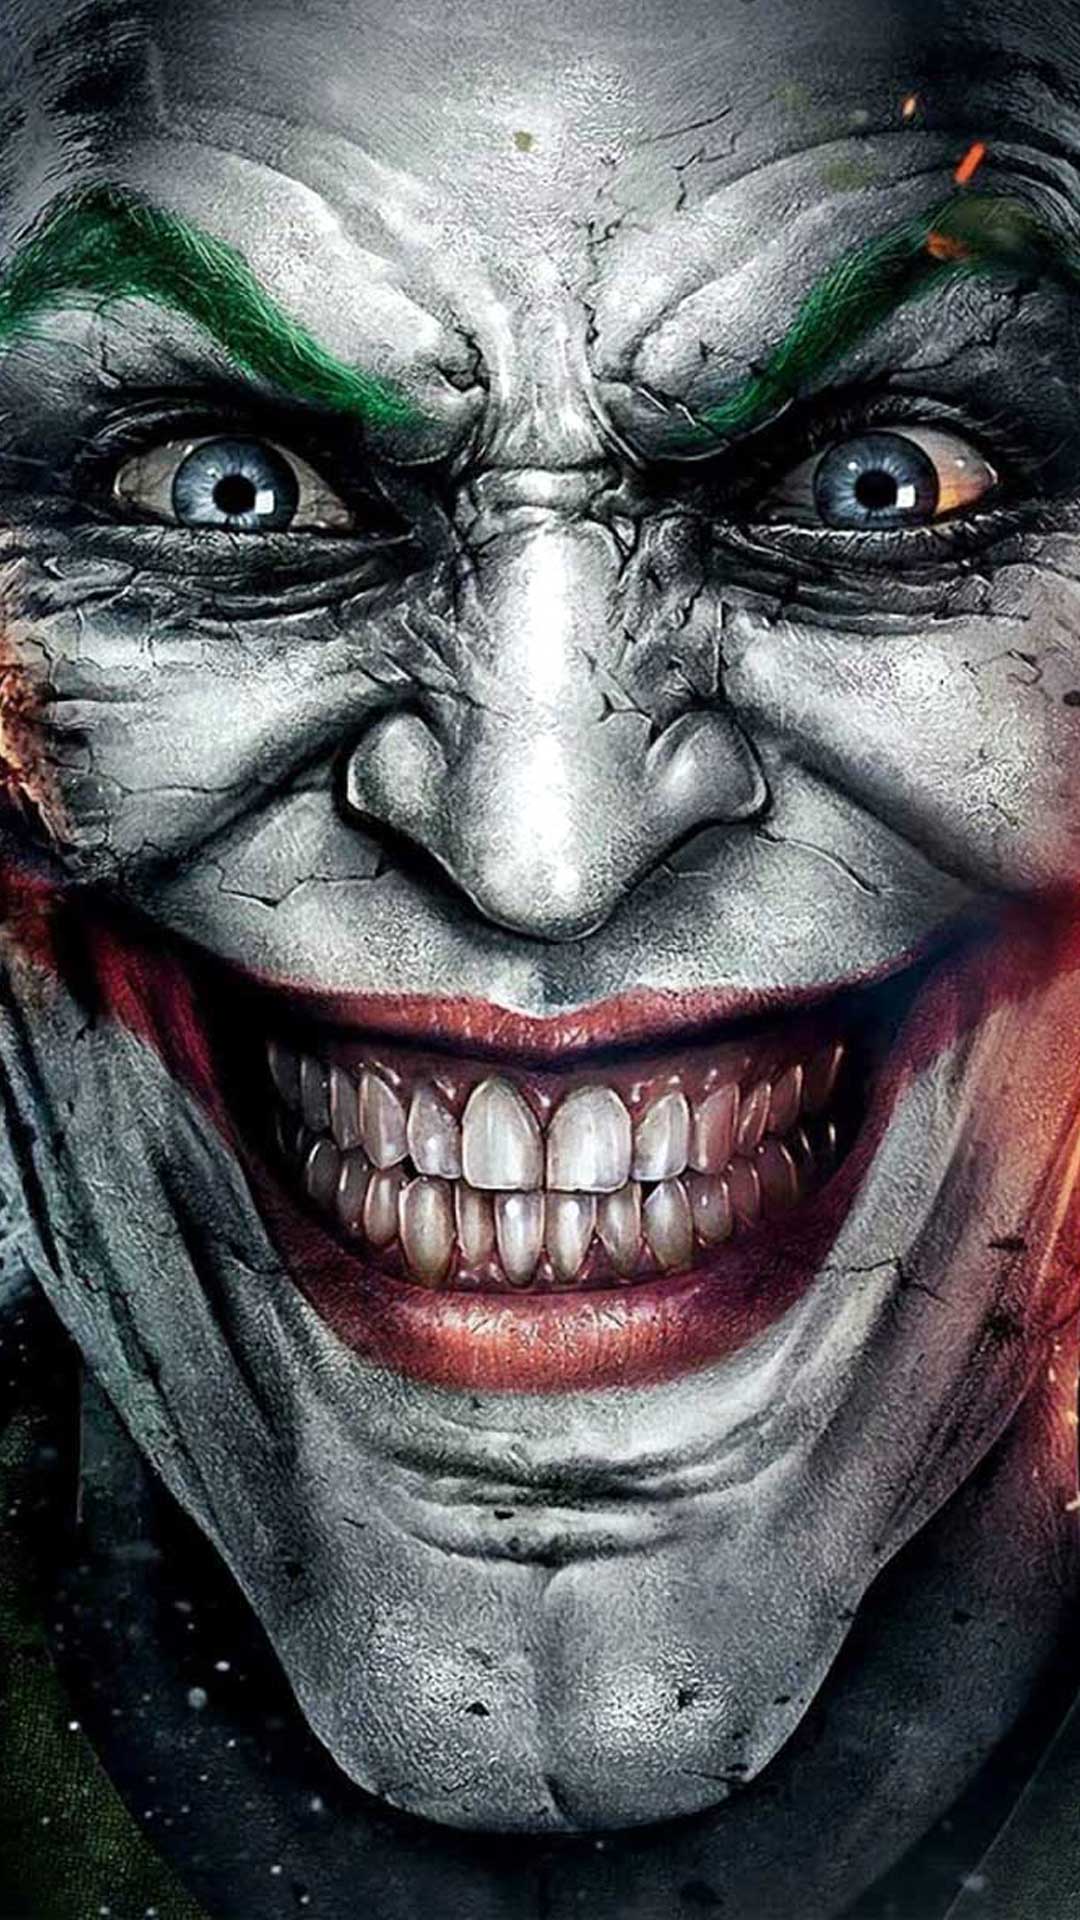 21 Joker 2019 Wallpapers On Wallpapersafari